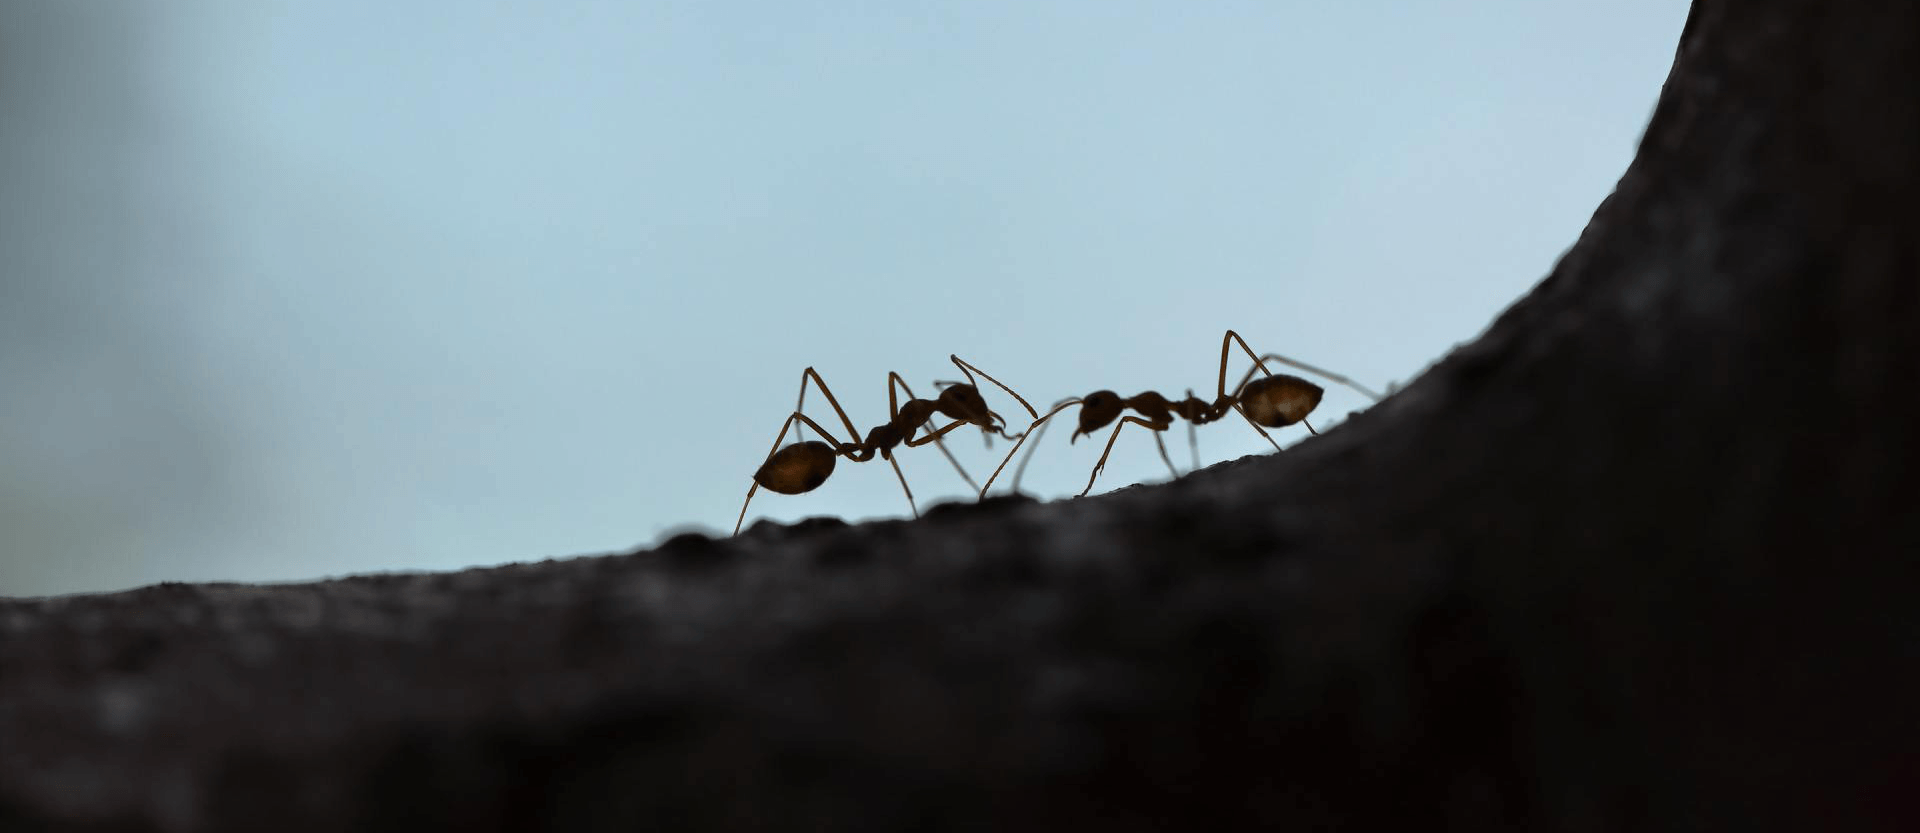 Ants-Are-Intelligent